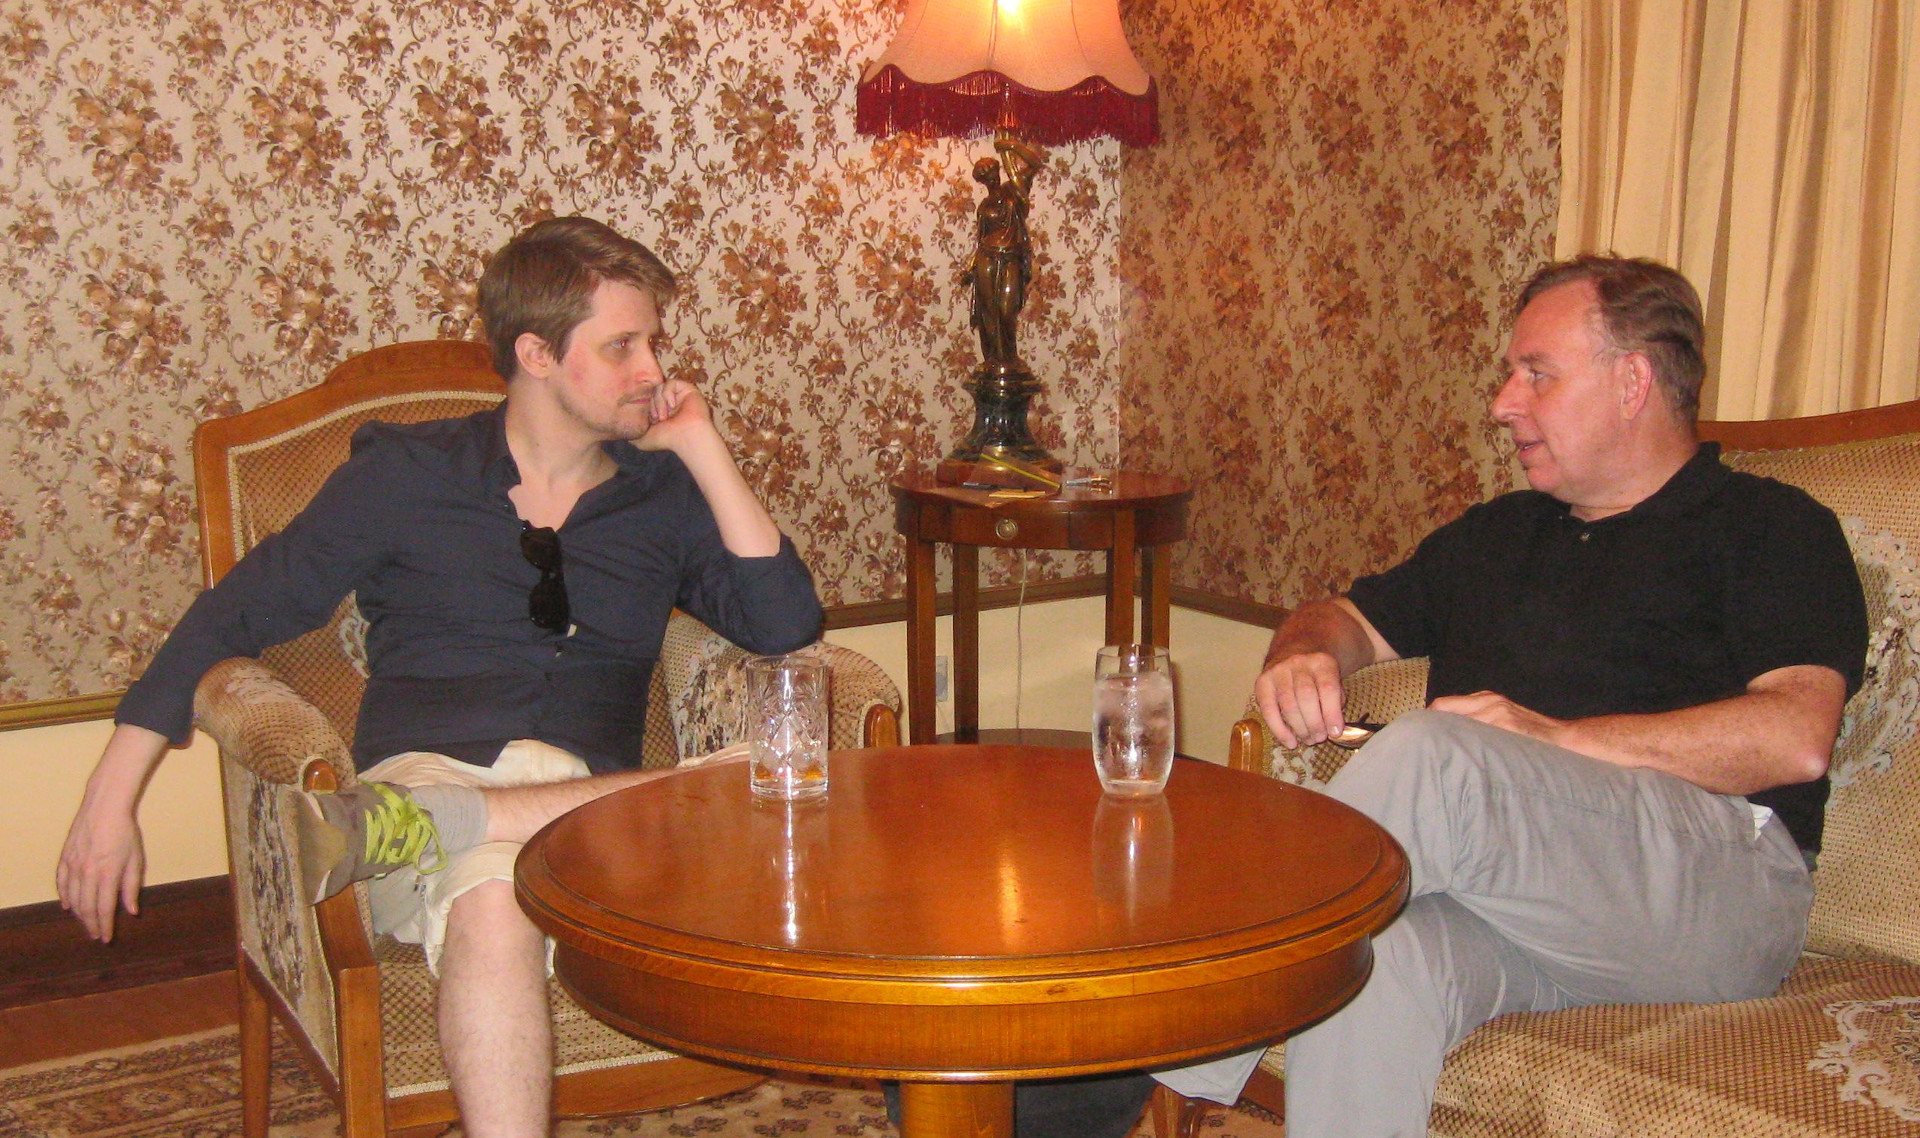 Edward Snowden and Robert Tibbo